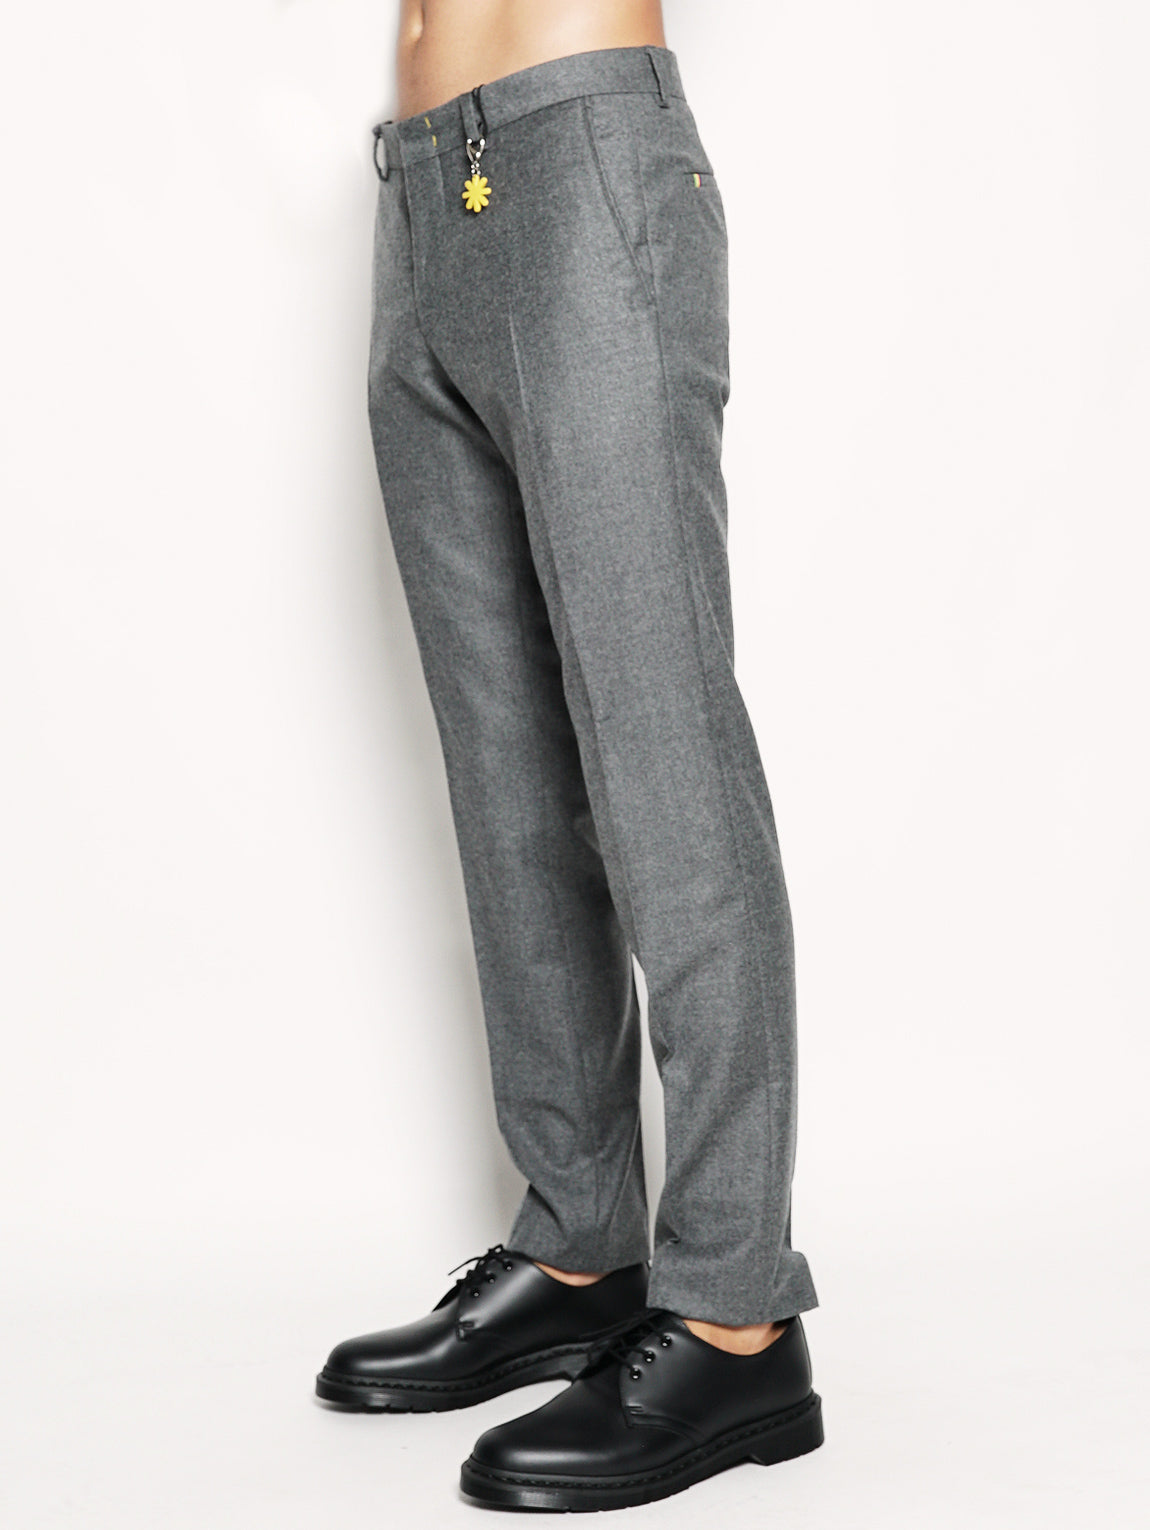 Pantalone elegante in lana Grigio-Pantaloni-MANUEL RITZ-TRYME Shop